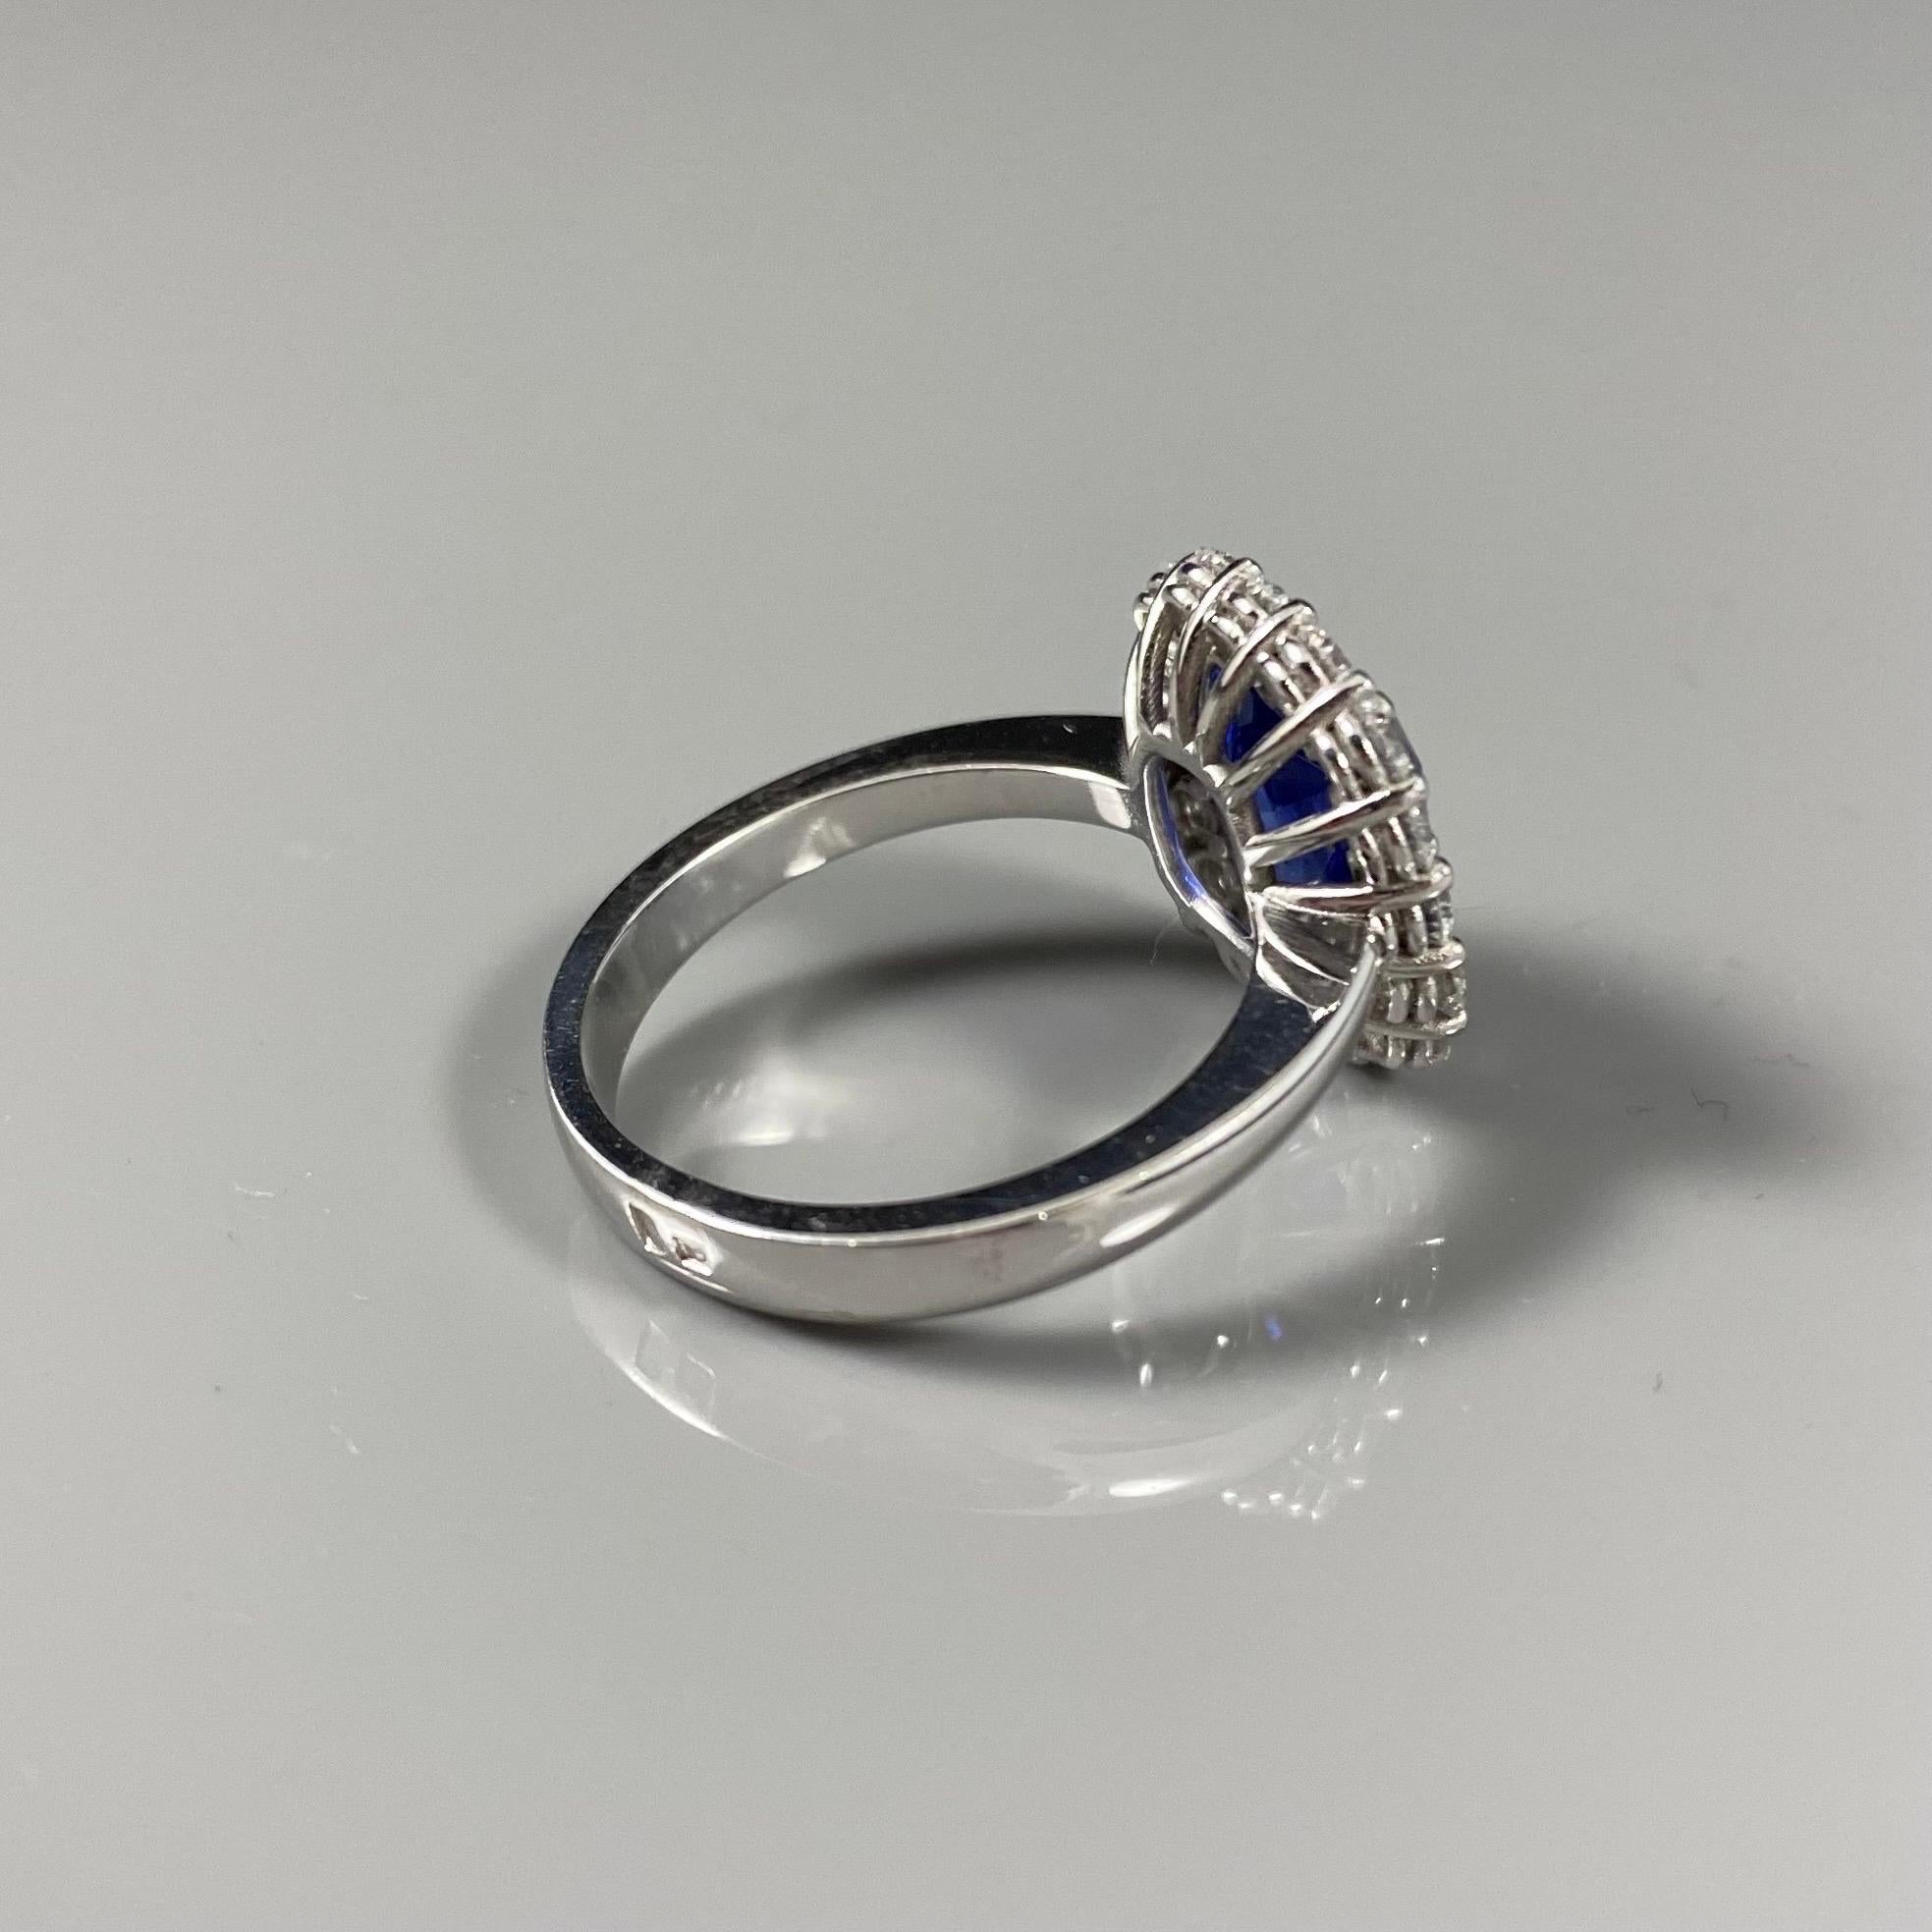 3.1 Carat Cornflower Blue Sapphire Diamond Cluster Engagement Ring White Gold 8